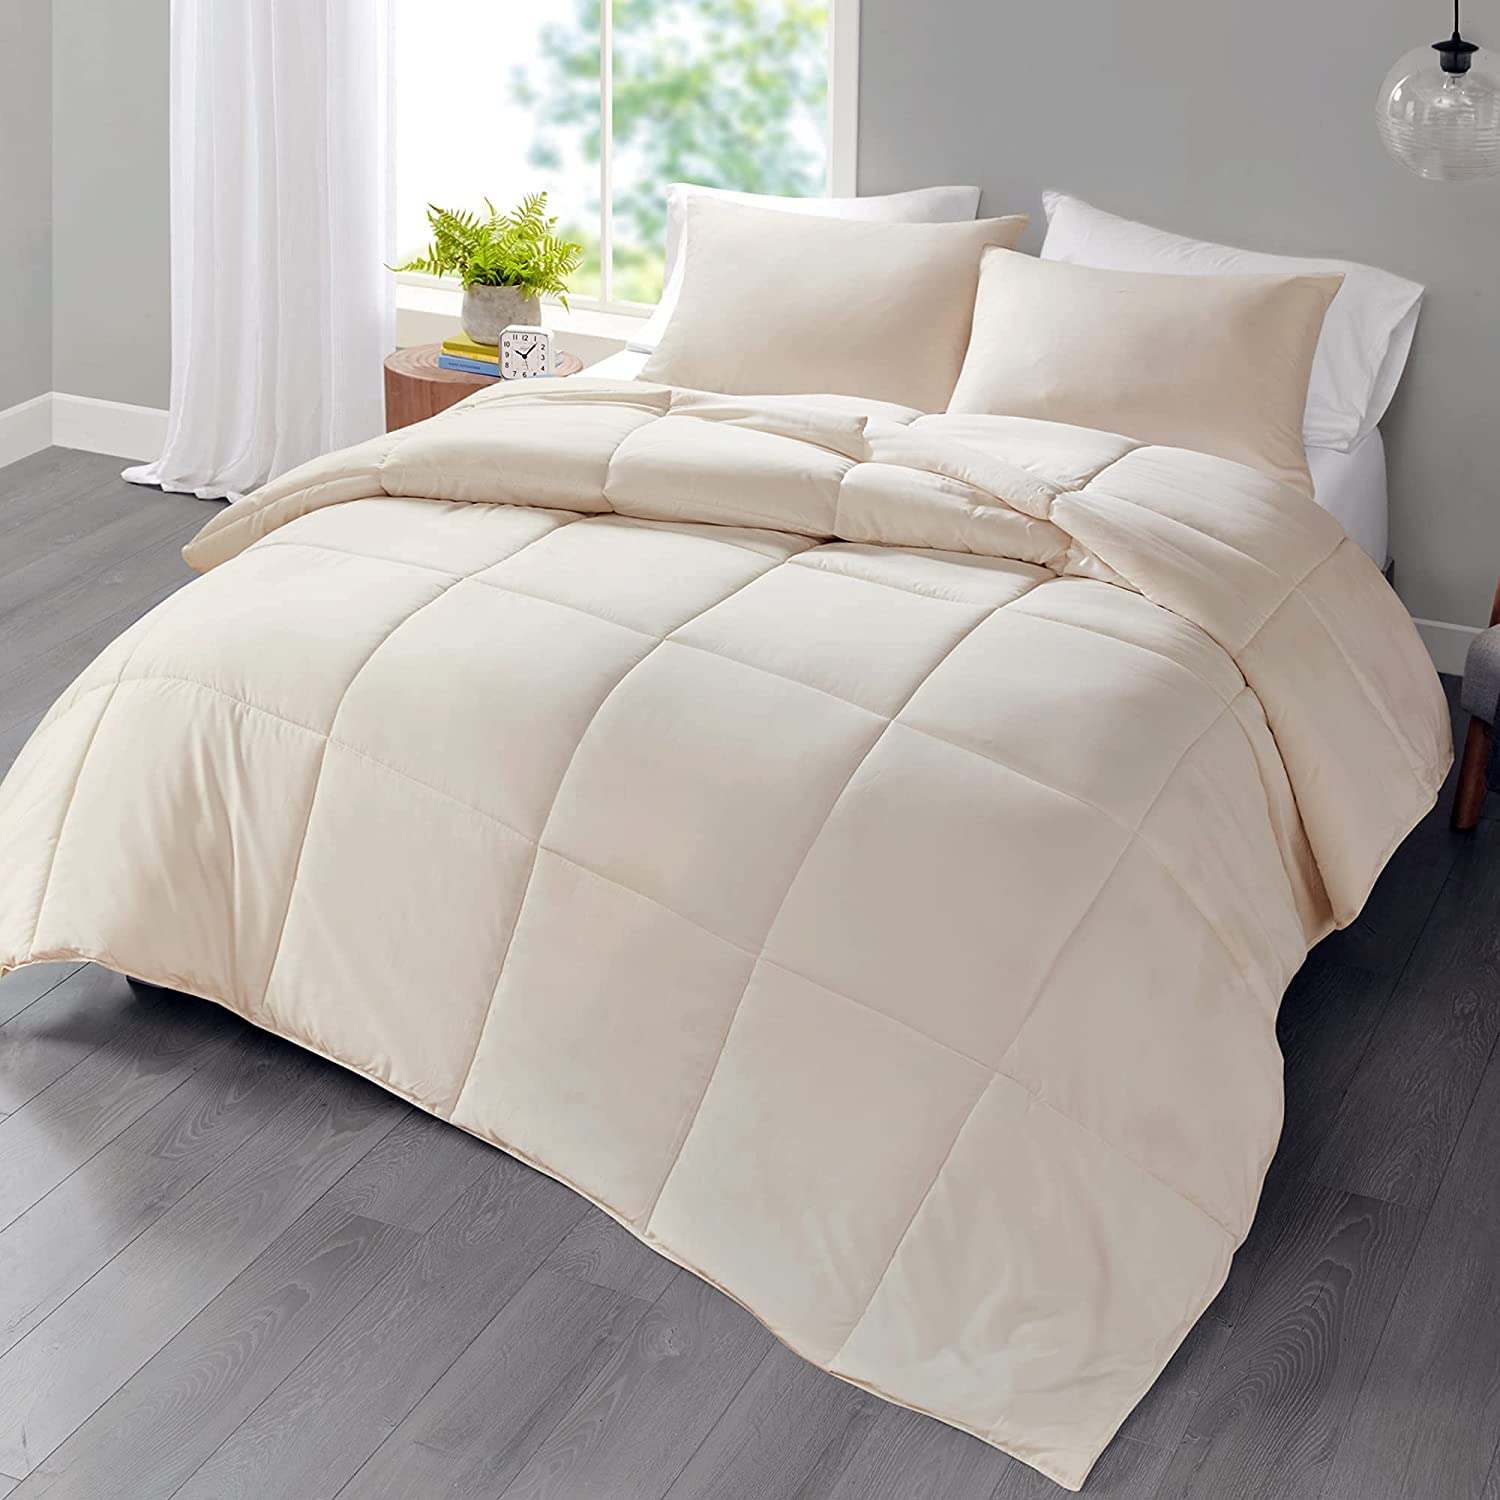 Hyde Lane Solid Black Comforter Set Queen Size Full Sized Bedding Sets 90x90“ 3 Pcs 2 Sham Lightweight Down Alternative Filling Comforter 